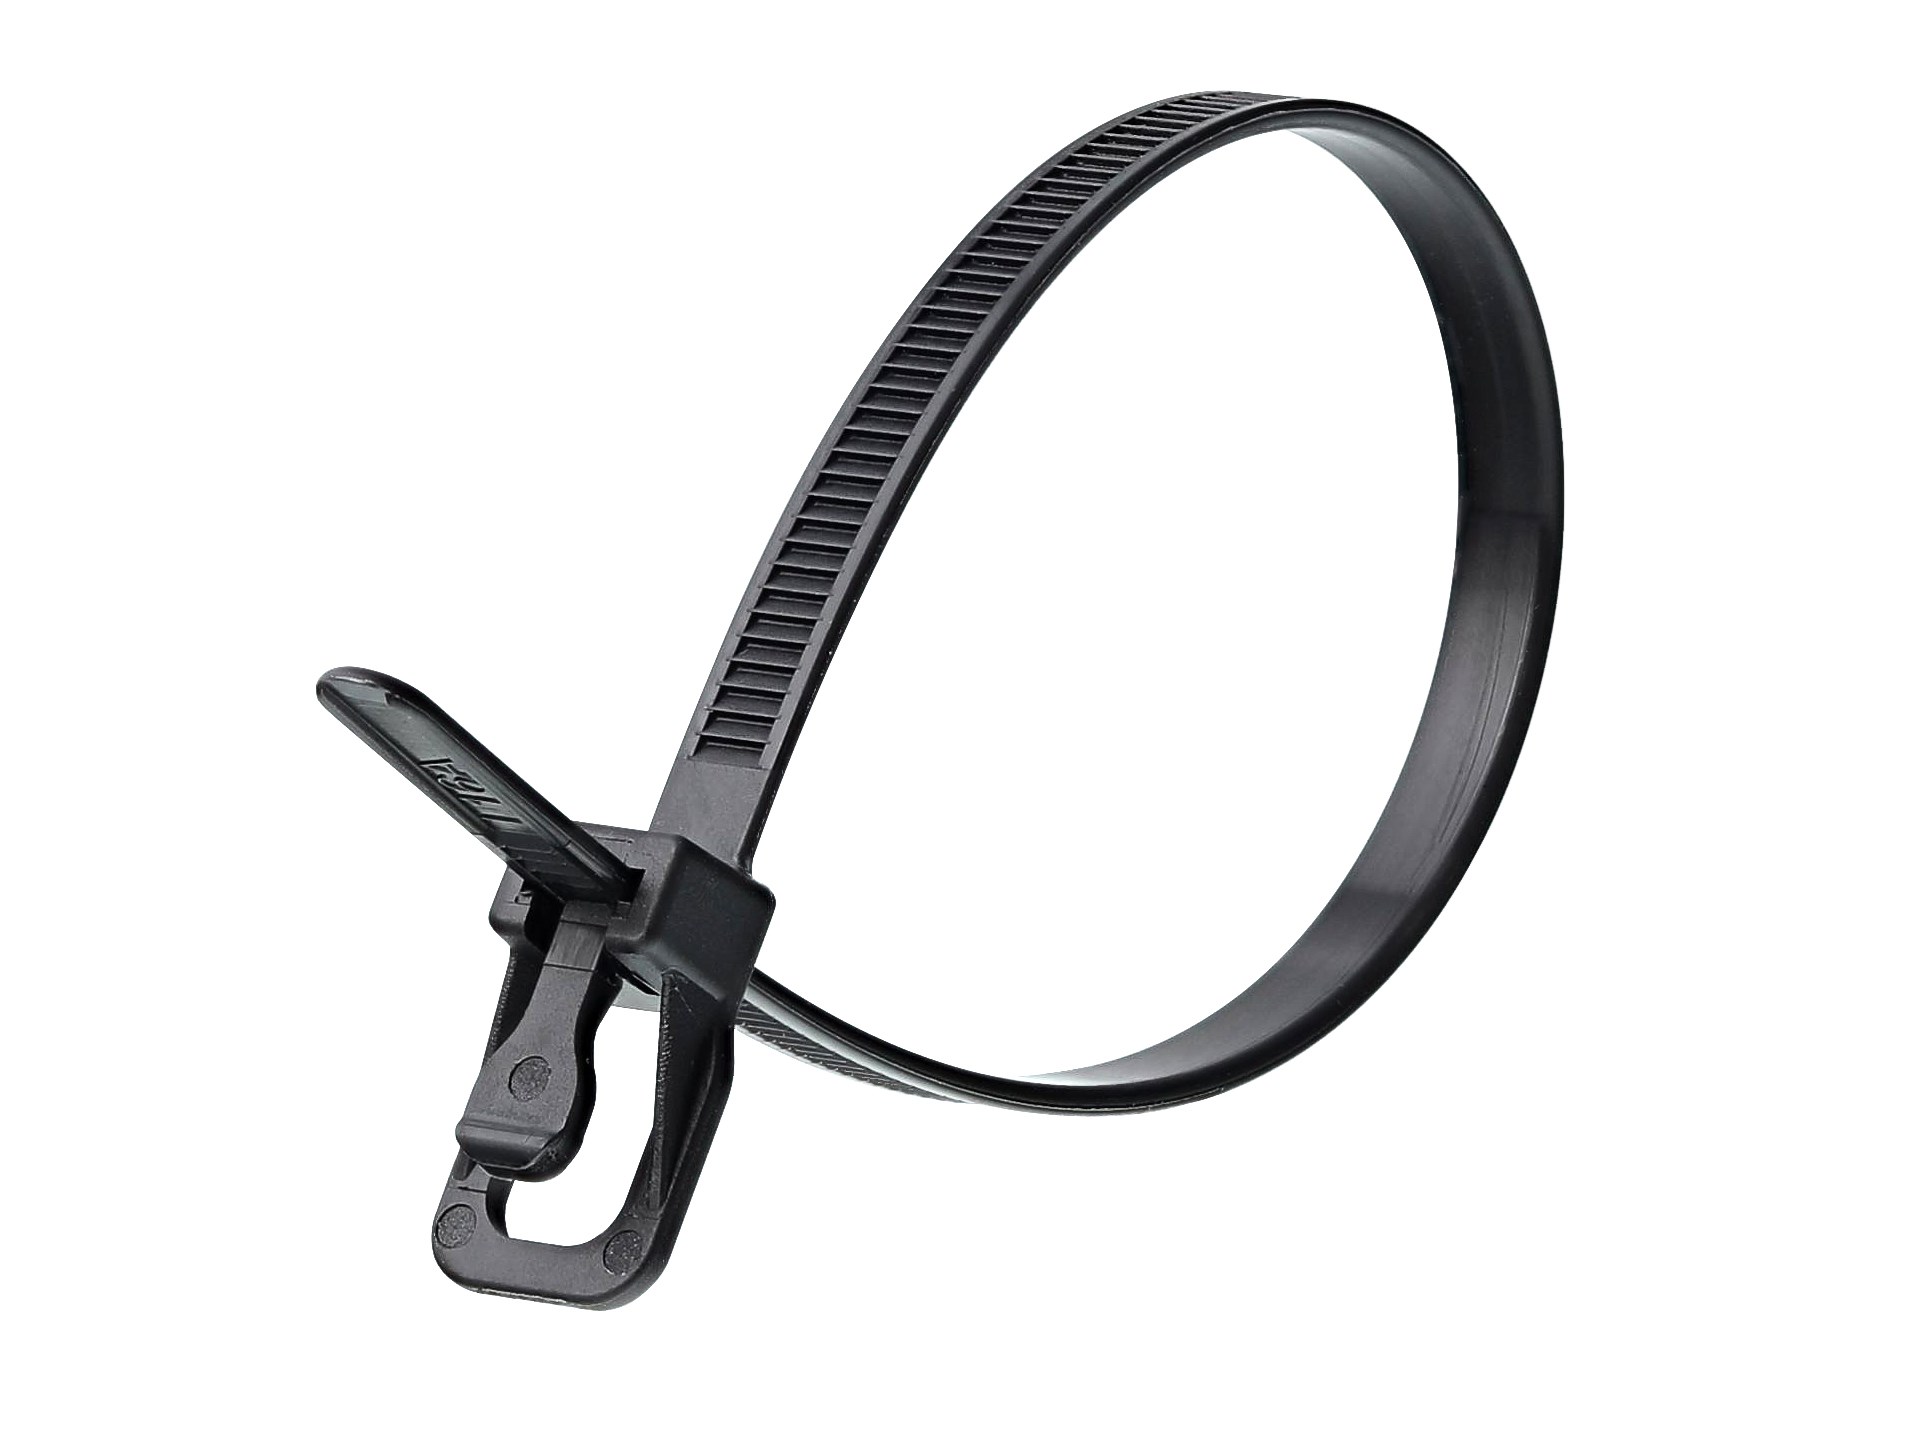 8-inch UV Resistant Black Multi-Purpose Cable Tie, 120-lb Tensile